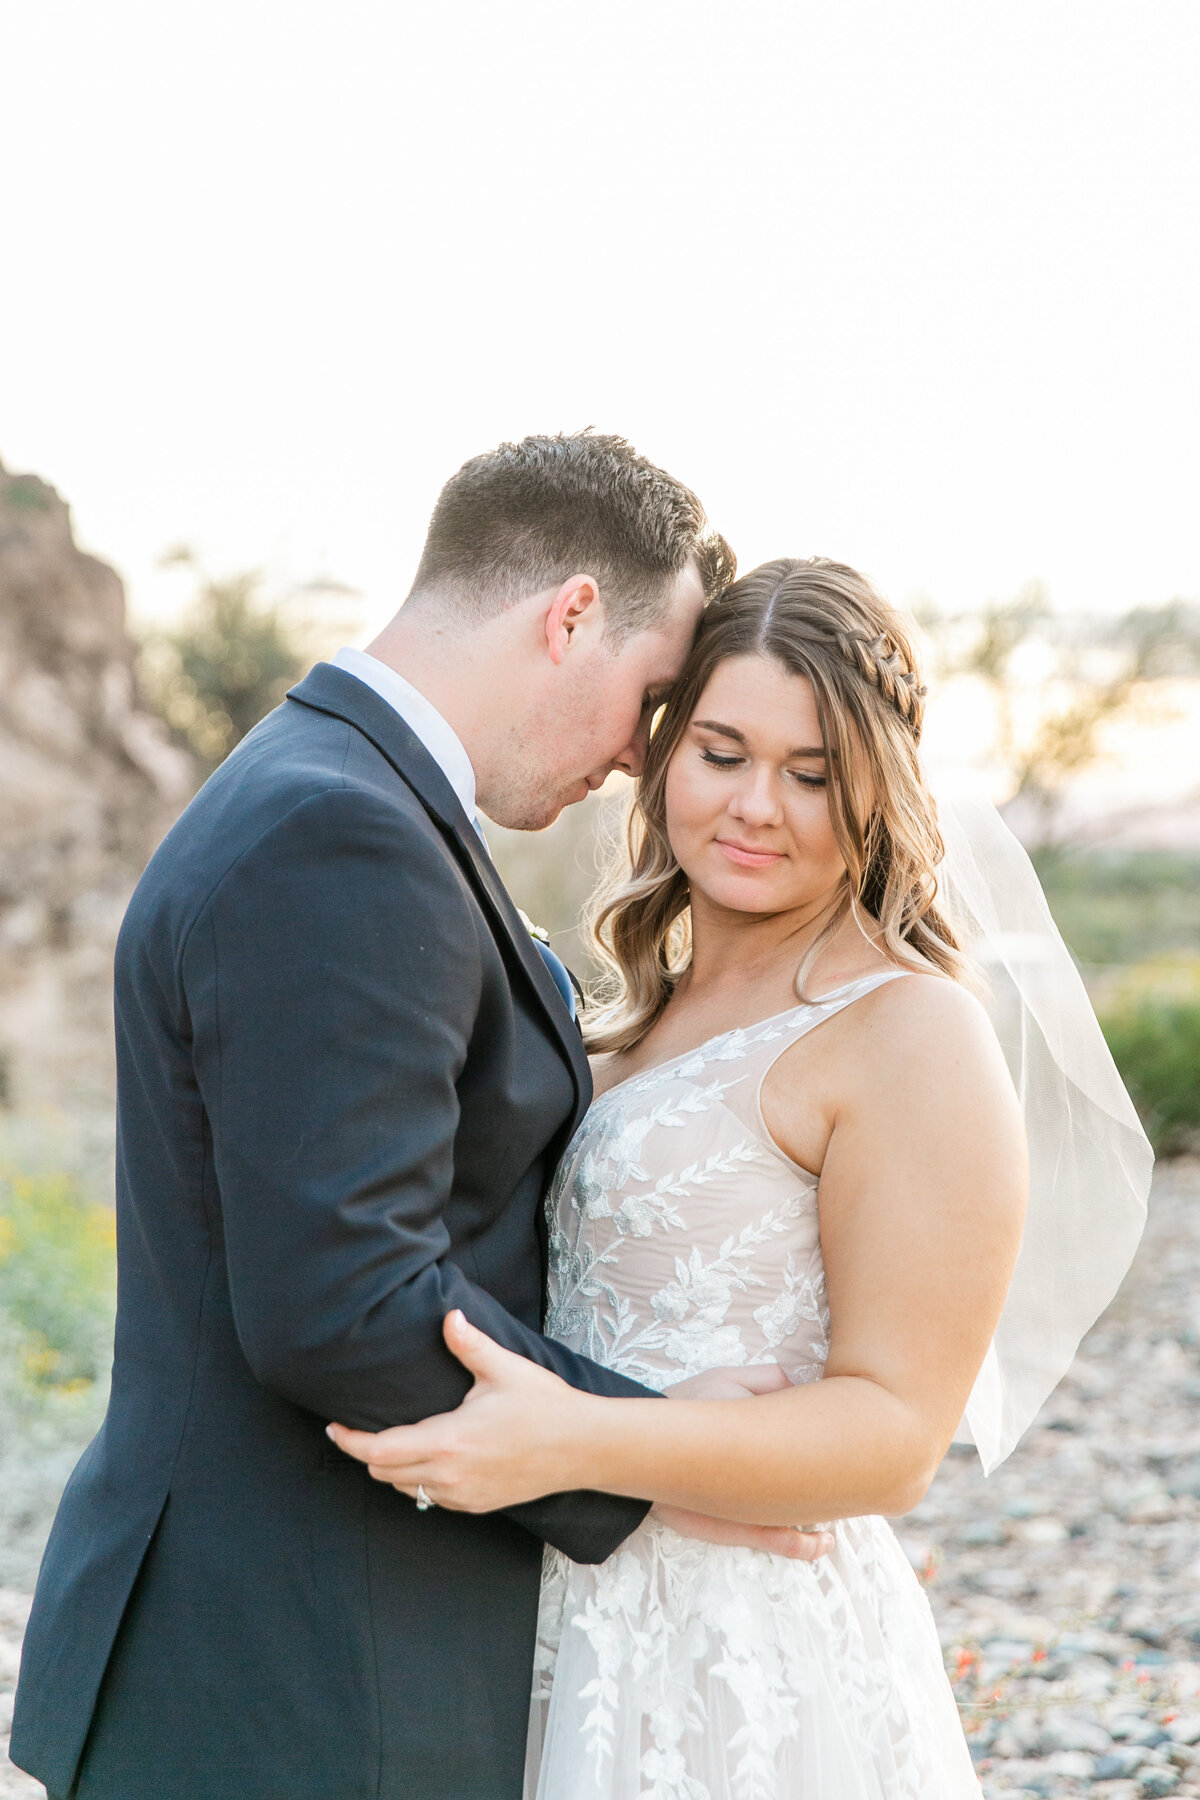 Karlie Colleen Photography - Arizona Backyard wedding - Brittney & Josh-234